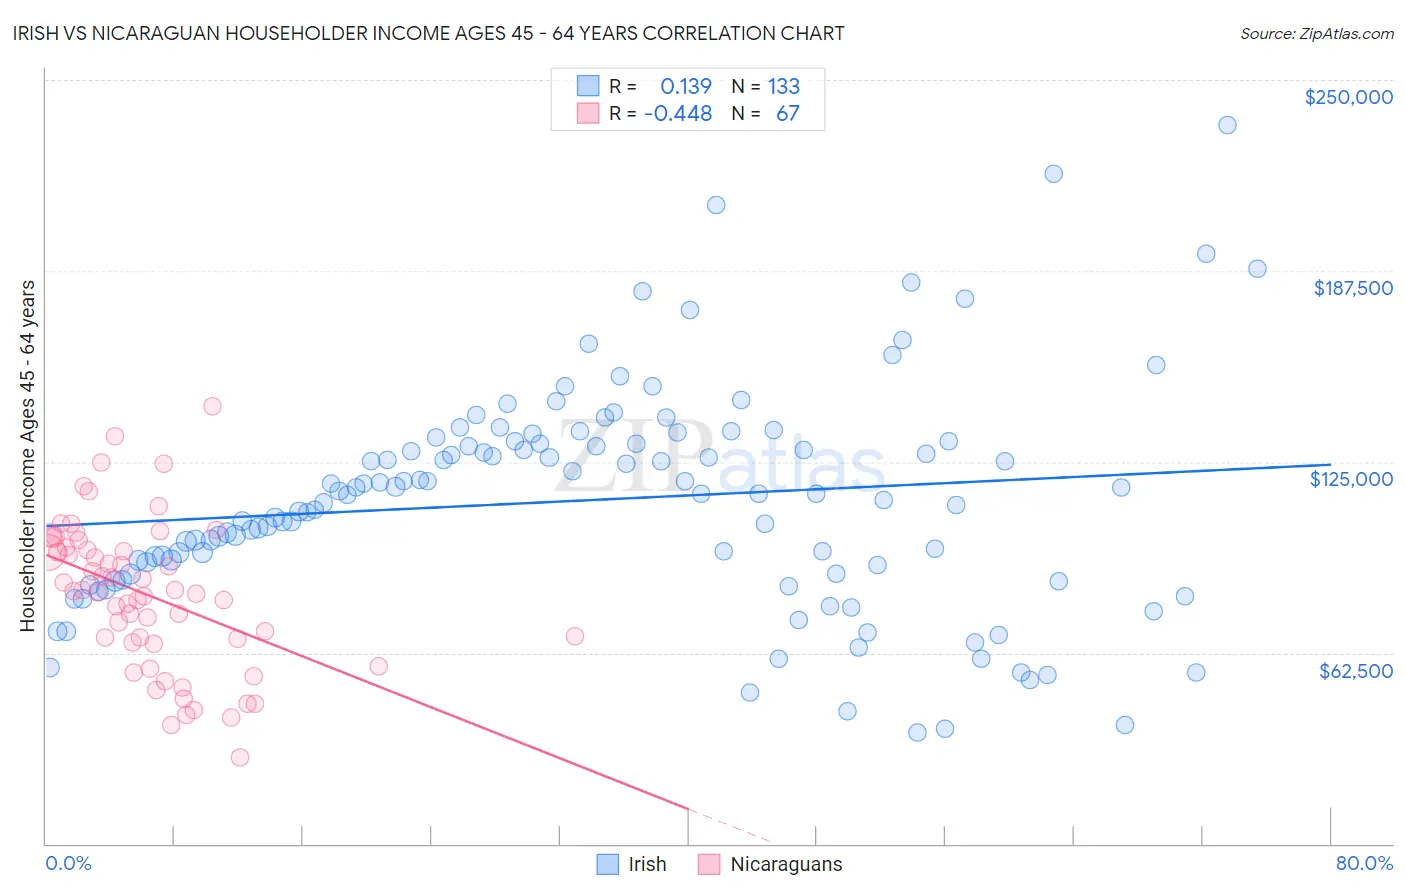 Irish vs Nicaraguan Householder Income Ages 45 - 64 years